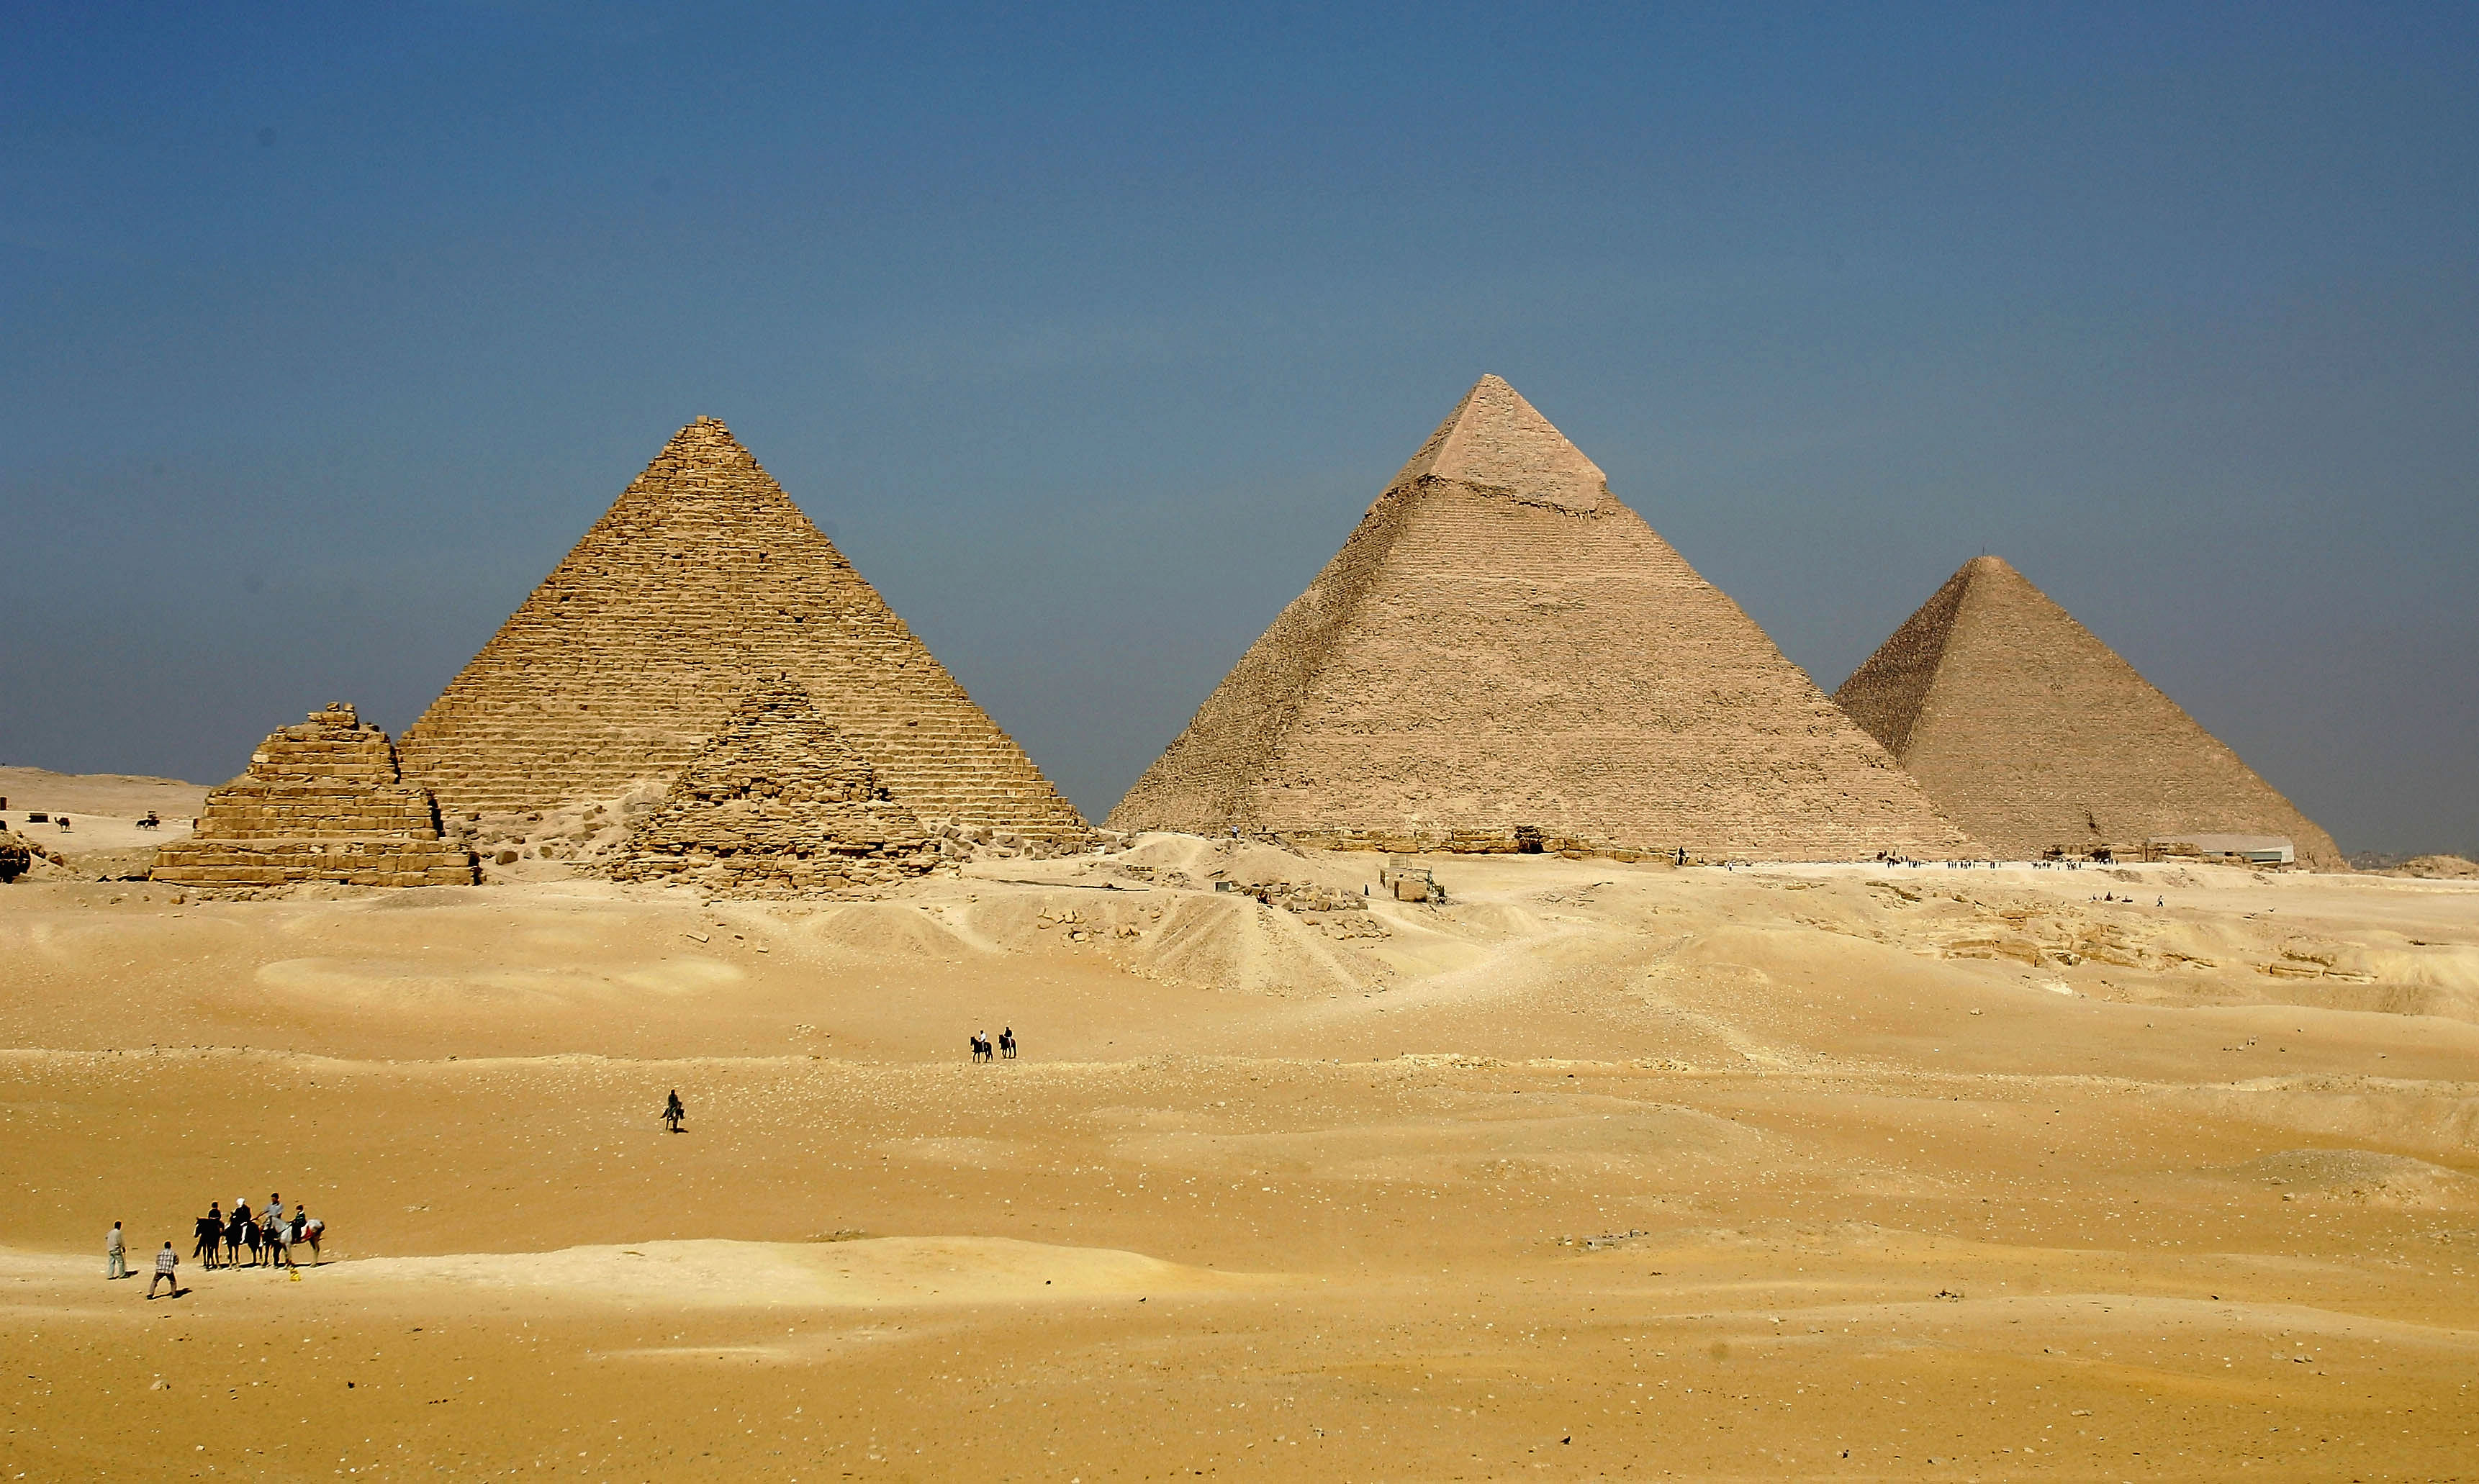 The pyramids of Giza.